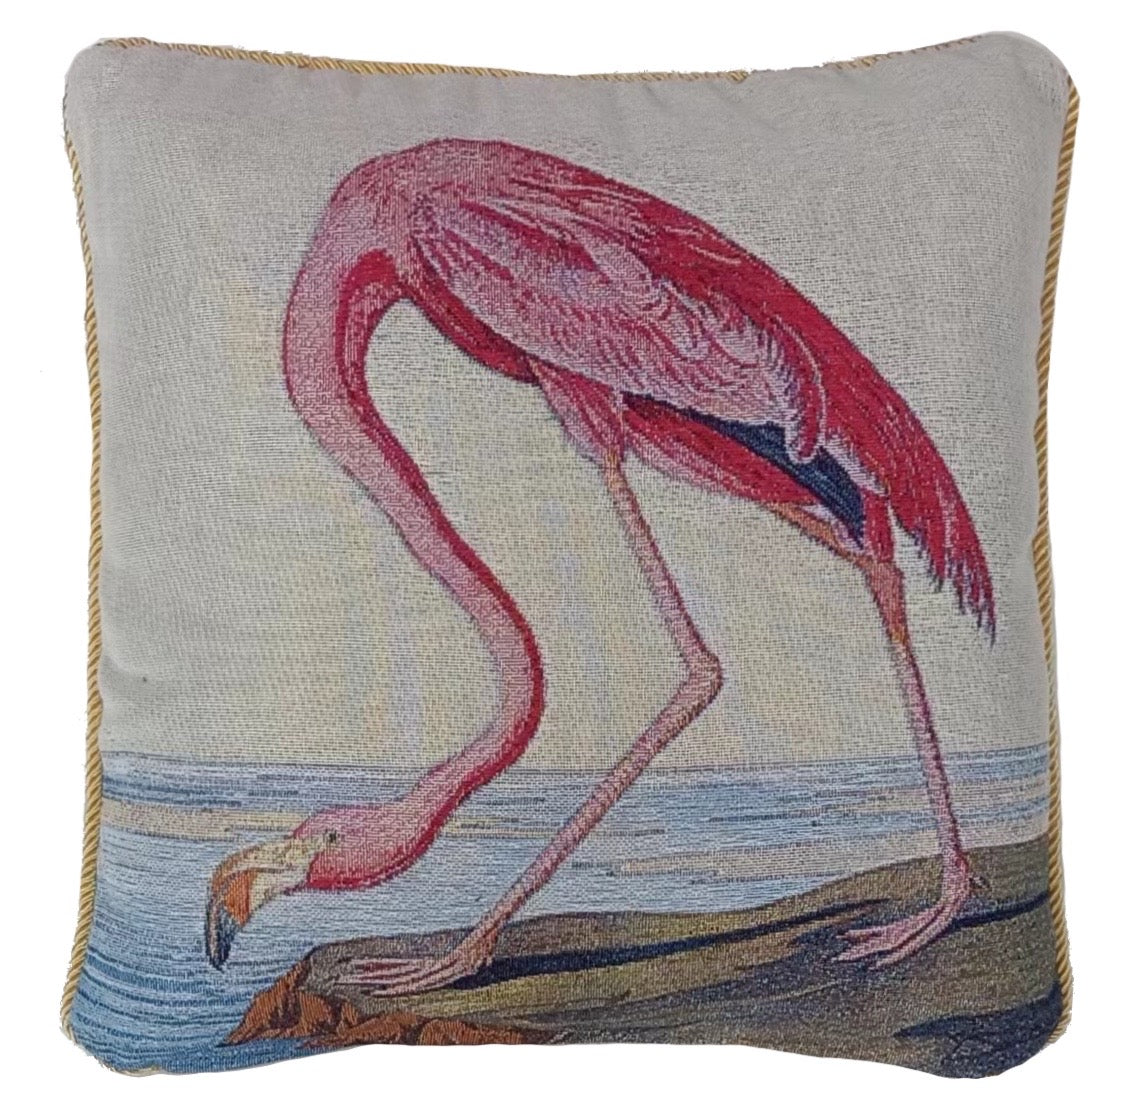 CCOV-ART-JA-PINKFLAMINGO Cushion Cover Art John Audubon - Pink Flamingo W45 x H45 CM (W18 x H18 INCH)